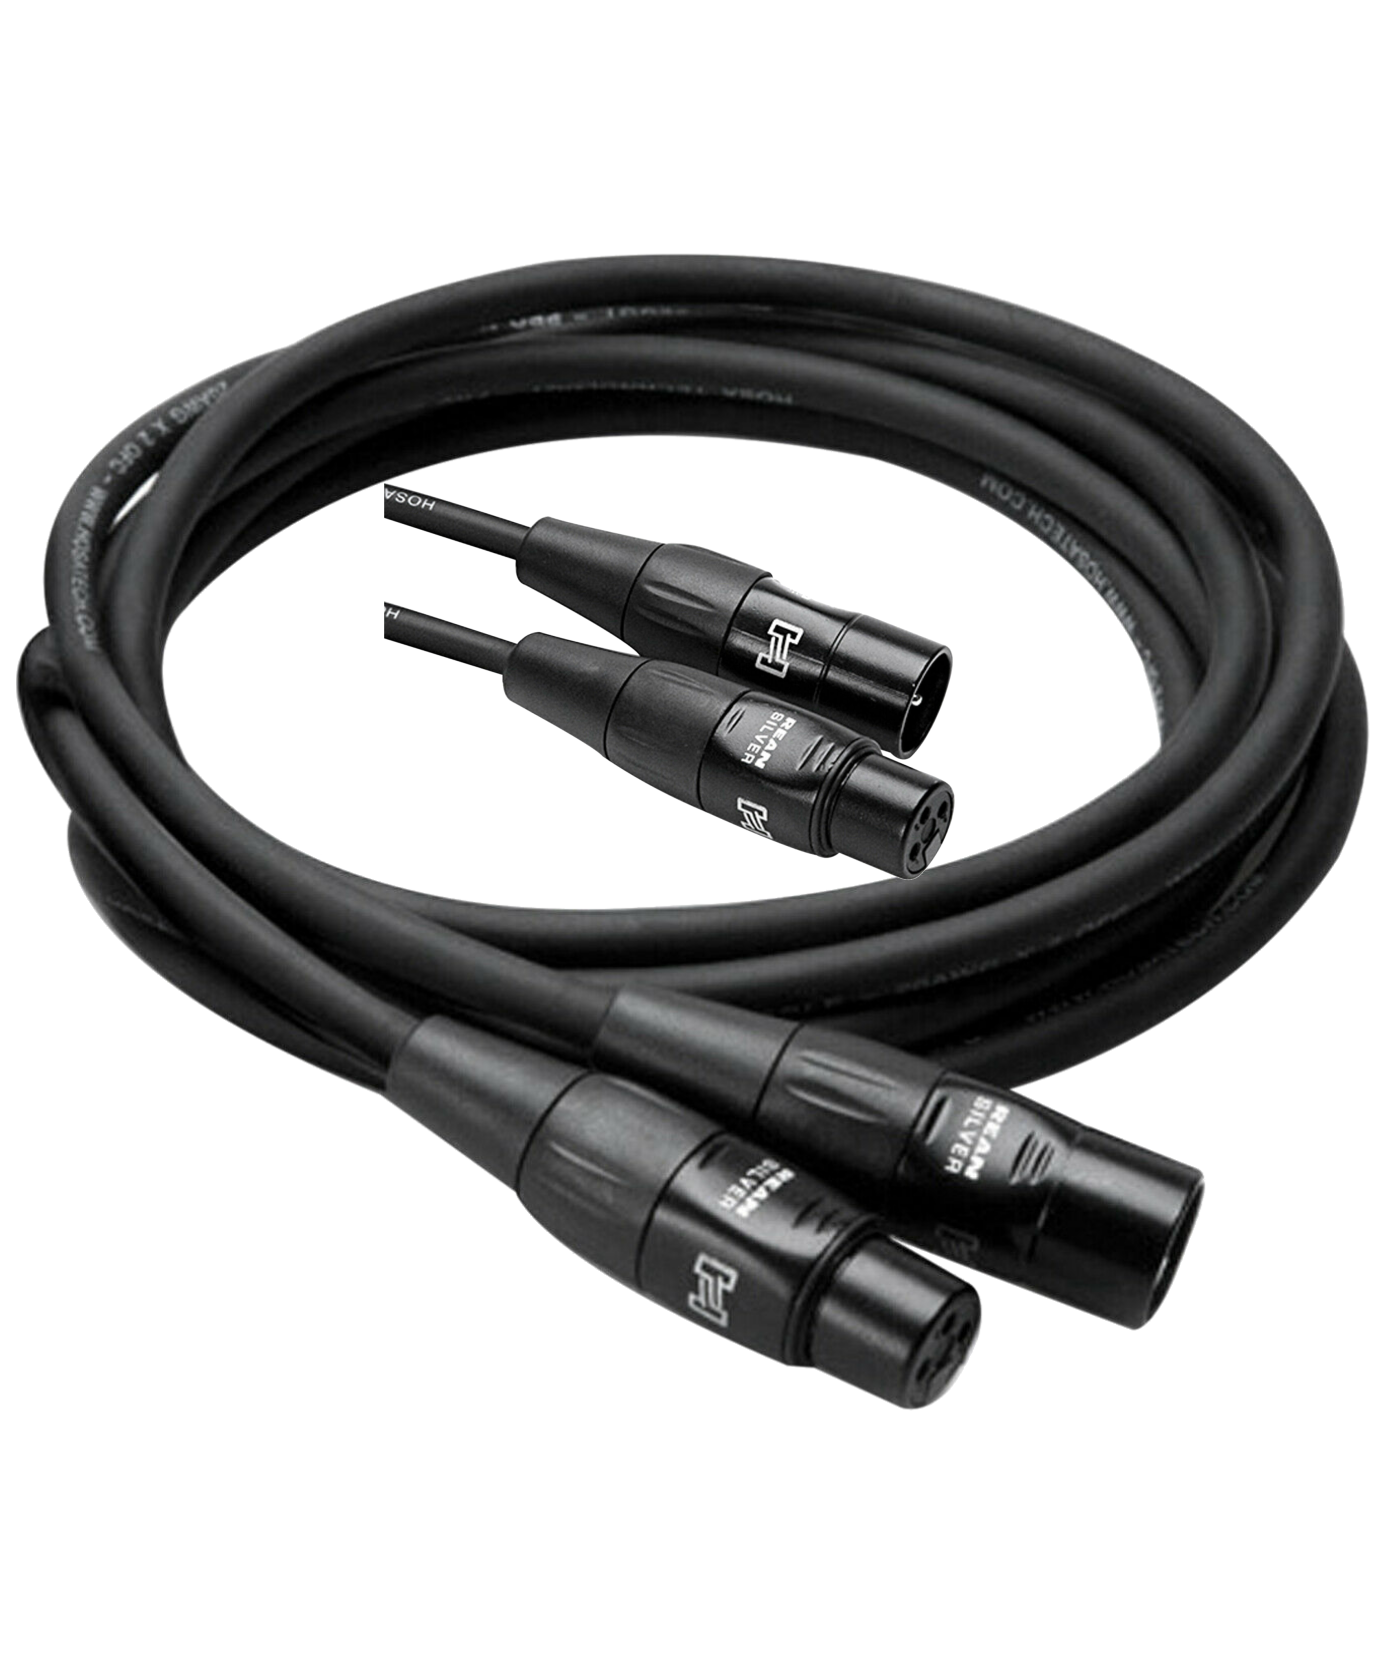 NEW - Hosa Pro Microphone Cable REAN XLR3F to XLR3M, HMIC-025 (25 Feet) Black